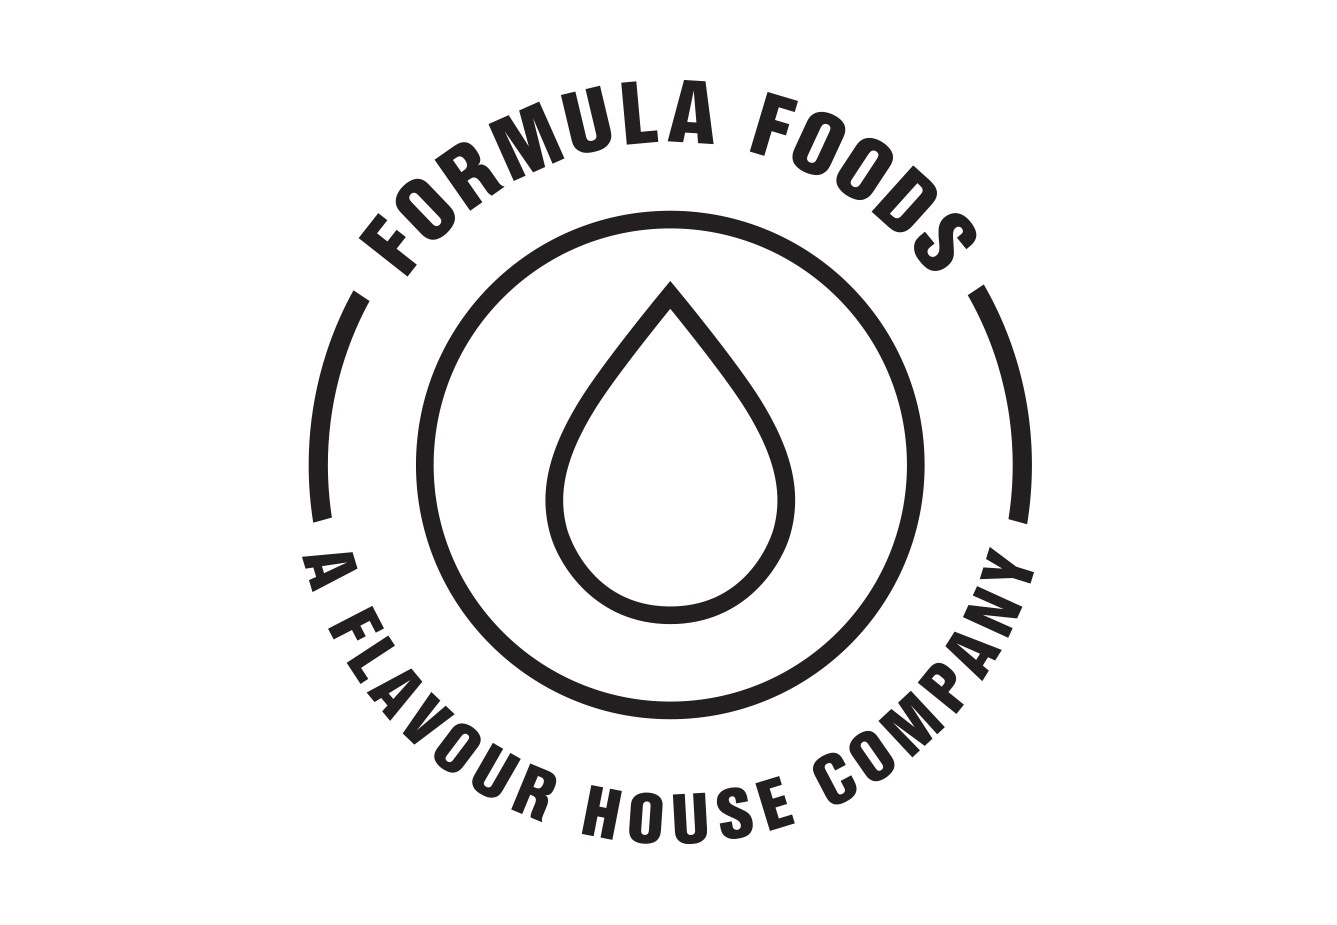 FB formula foods